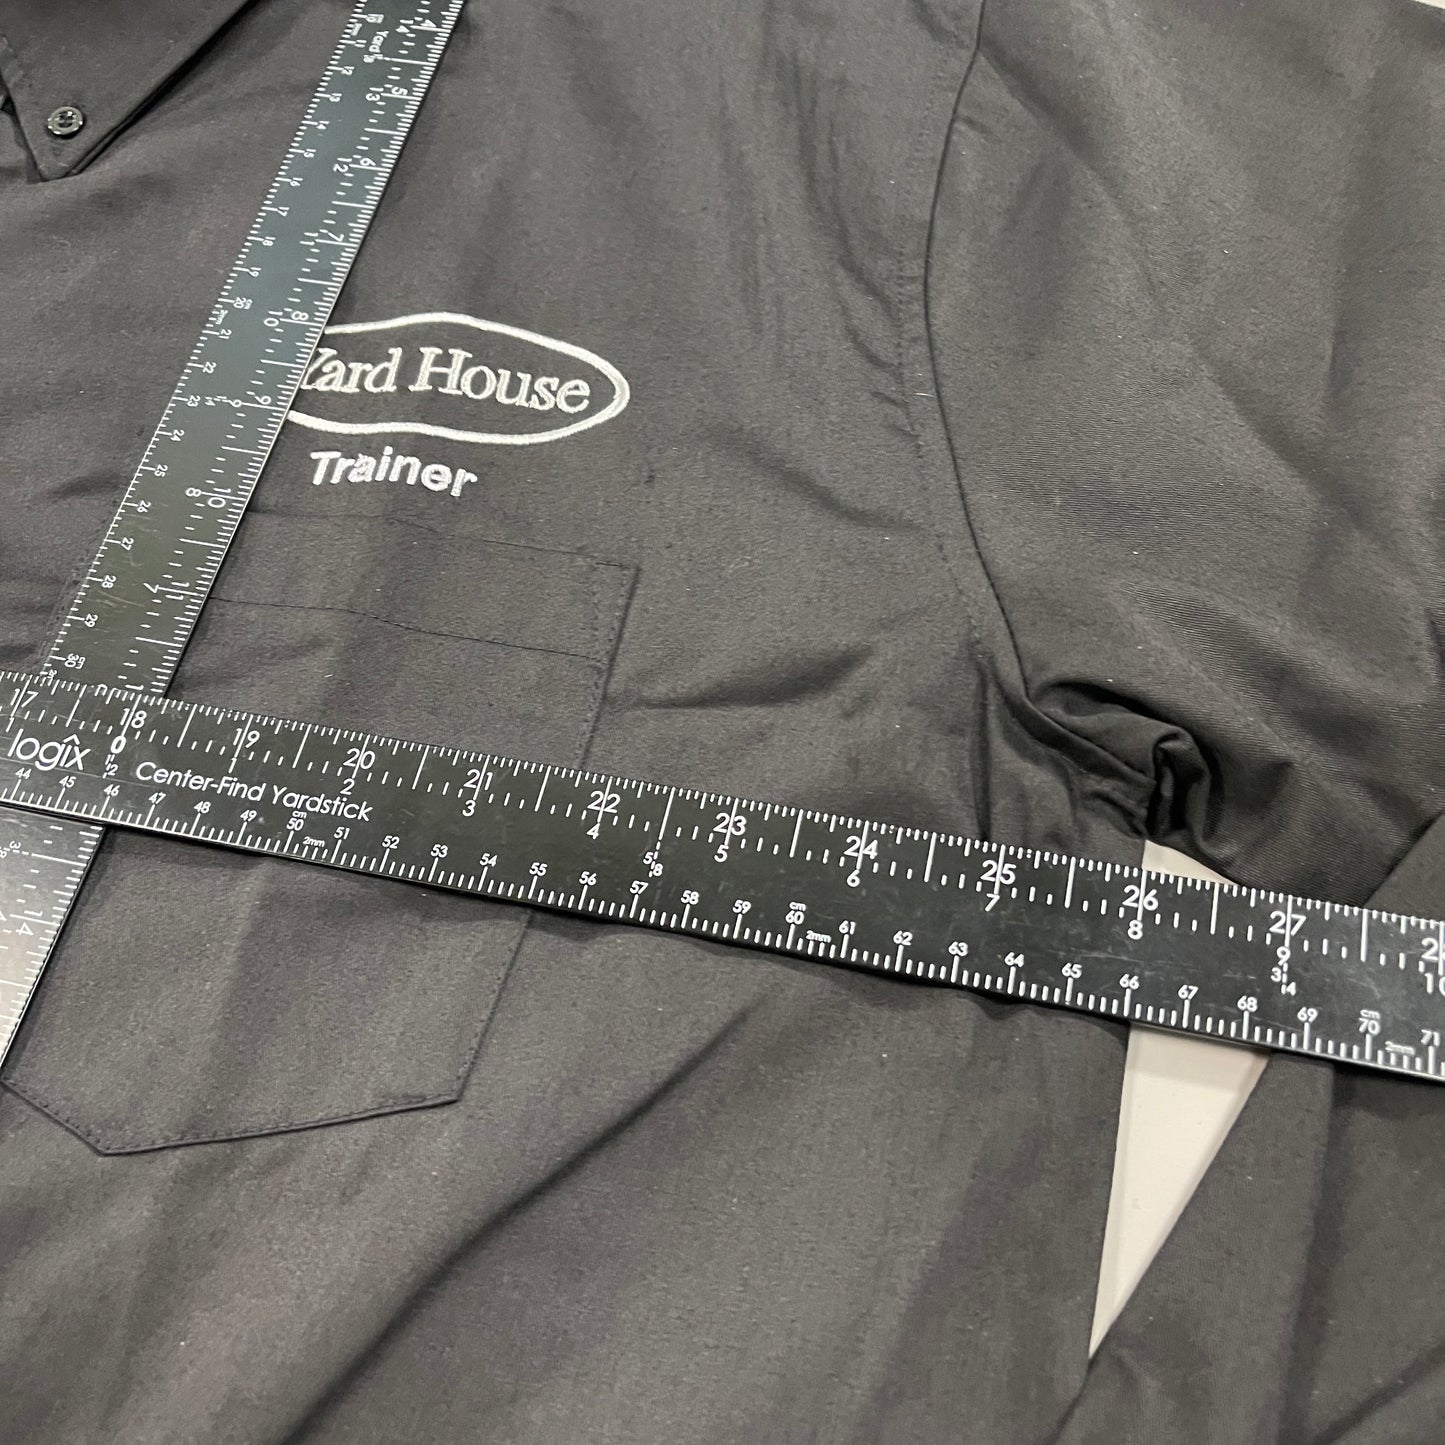 YARD HOUSE Employee "Trainer" Button Up Collared Shirt Men's Sz XL Black (New)